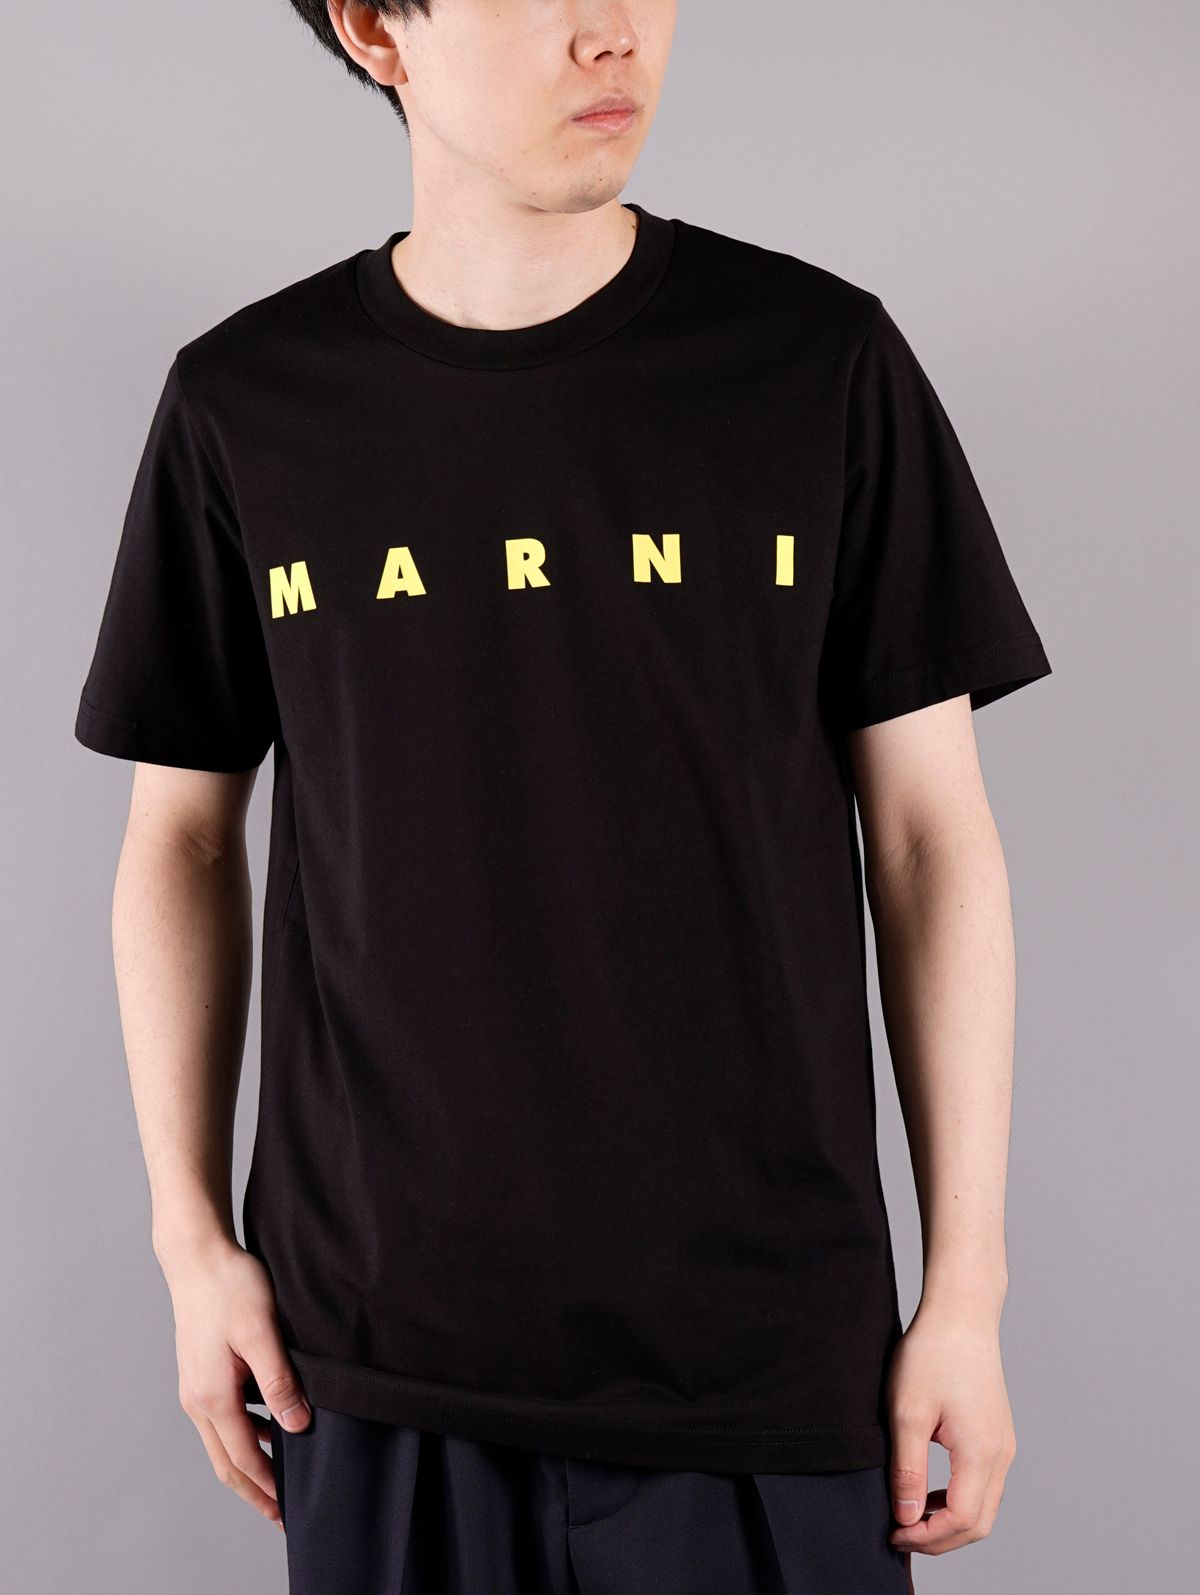 MARNI - マルニ / 21ss(Pre) | Confidence